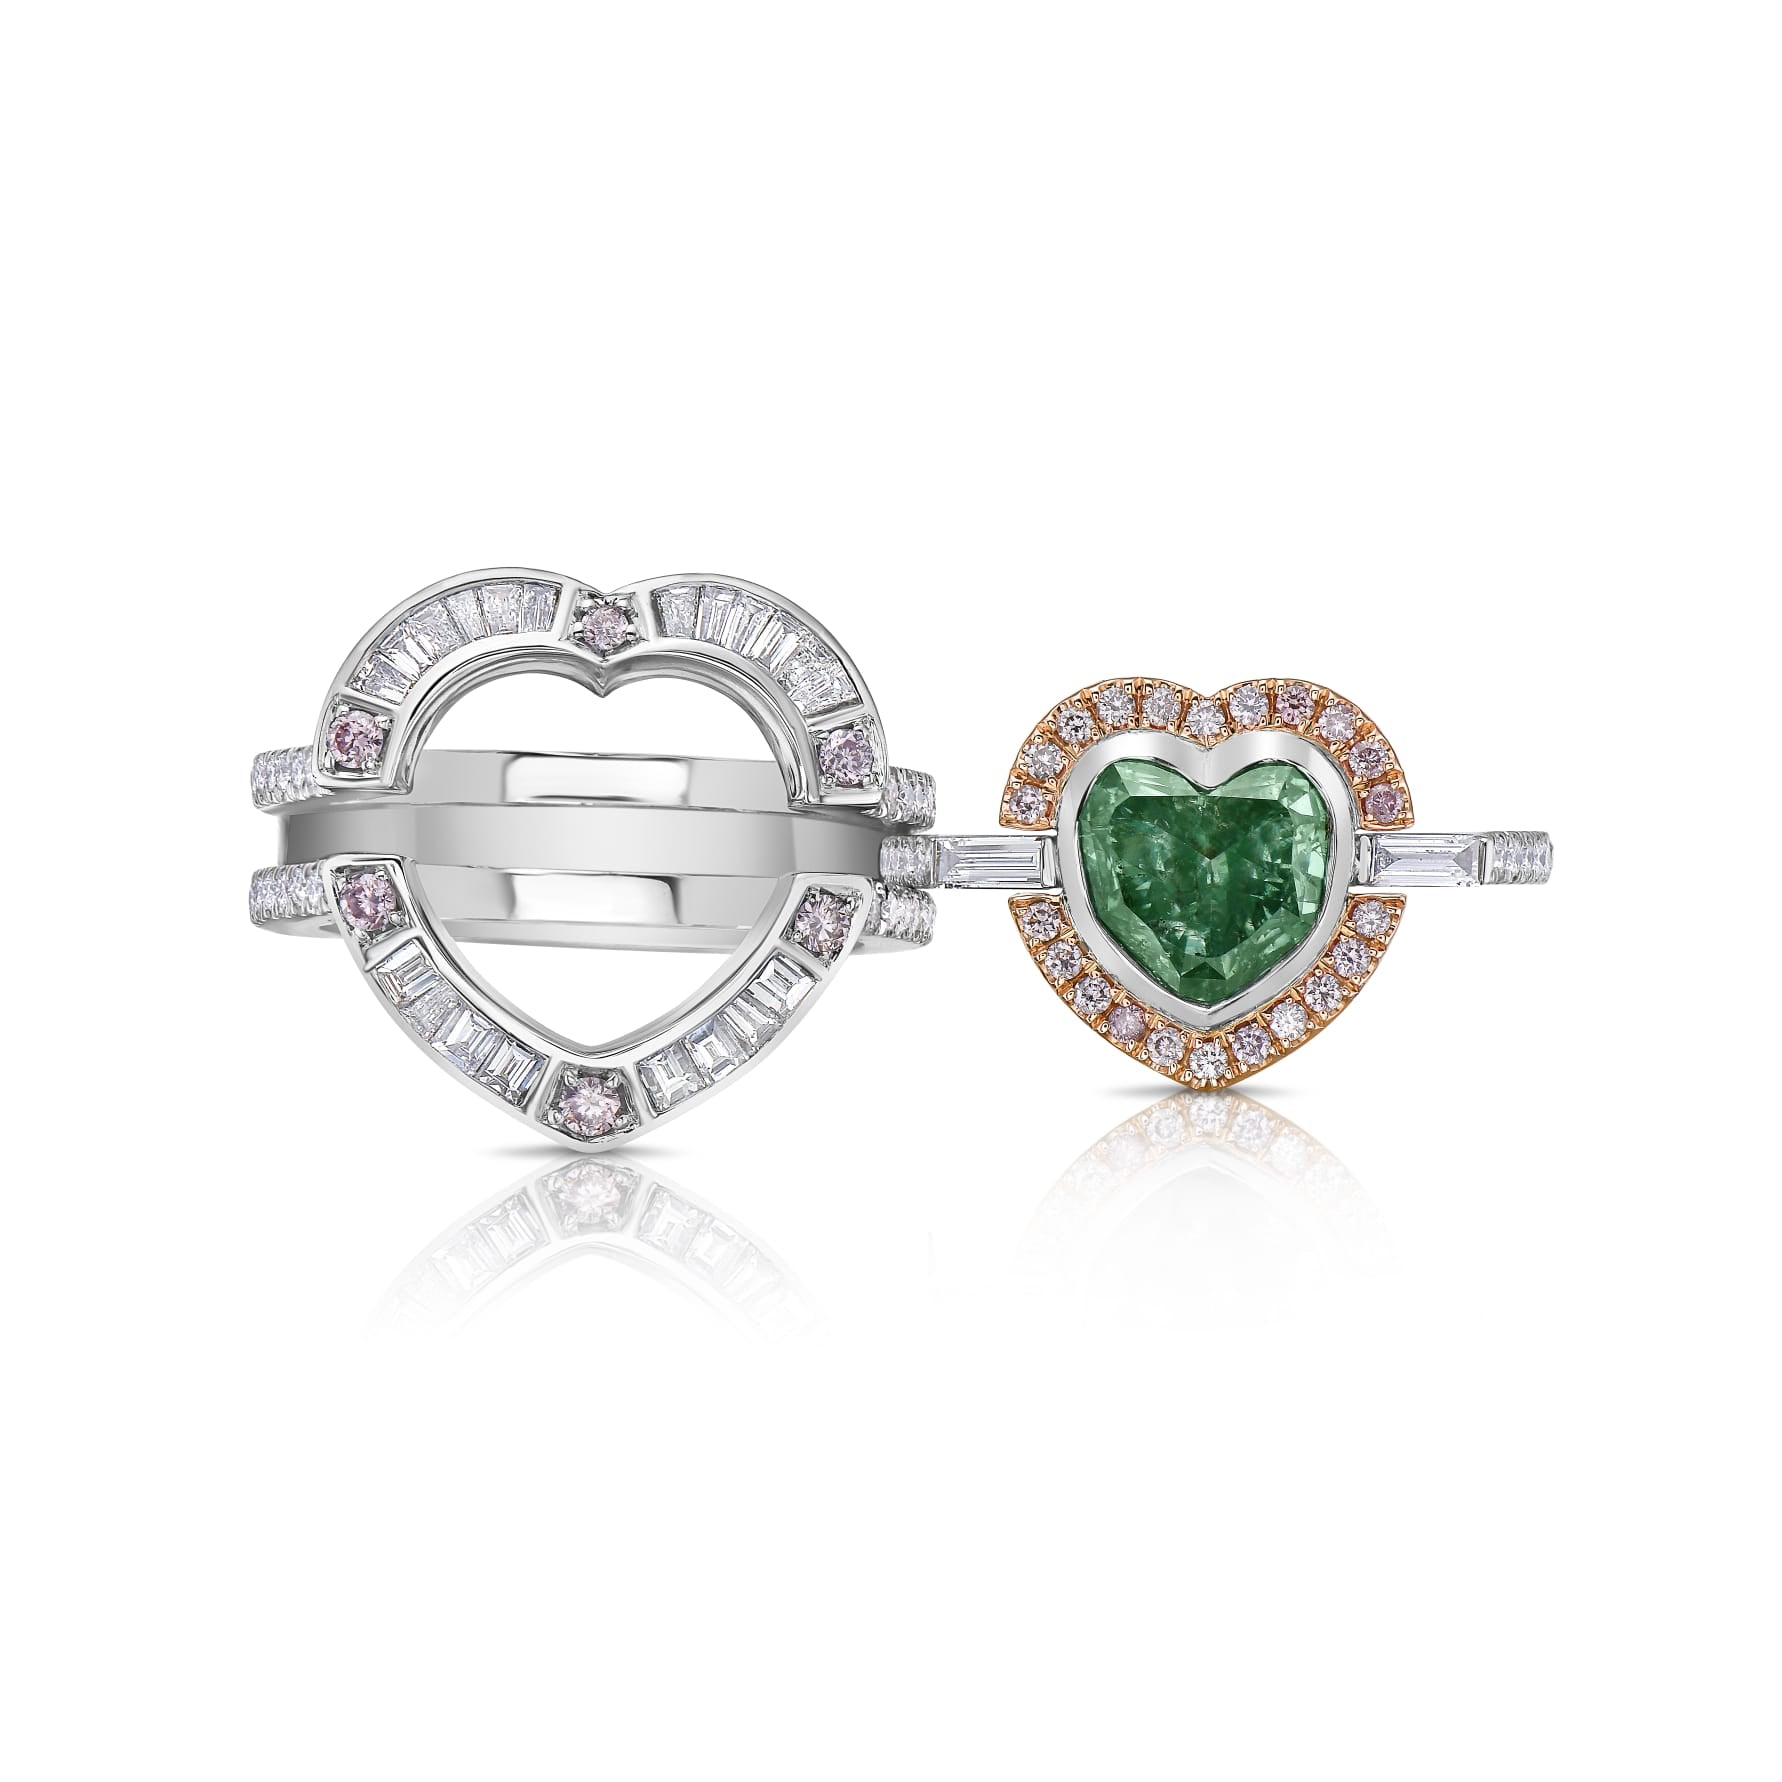 2.00ct GIA Fancy Intense Green Heart Shape Diamond Ring